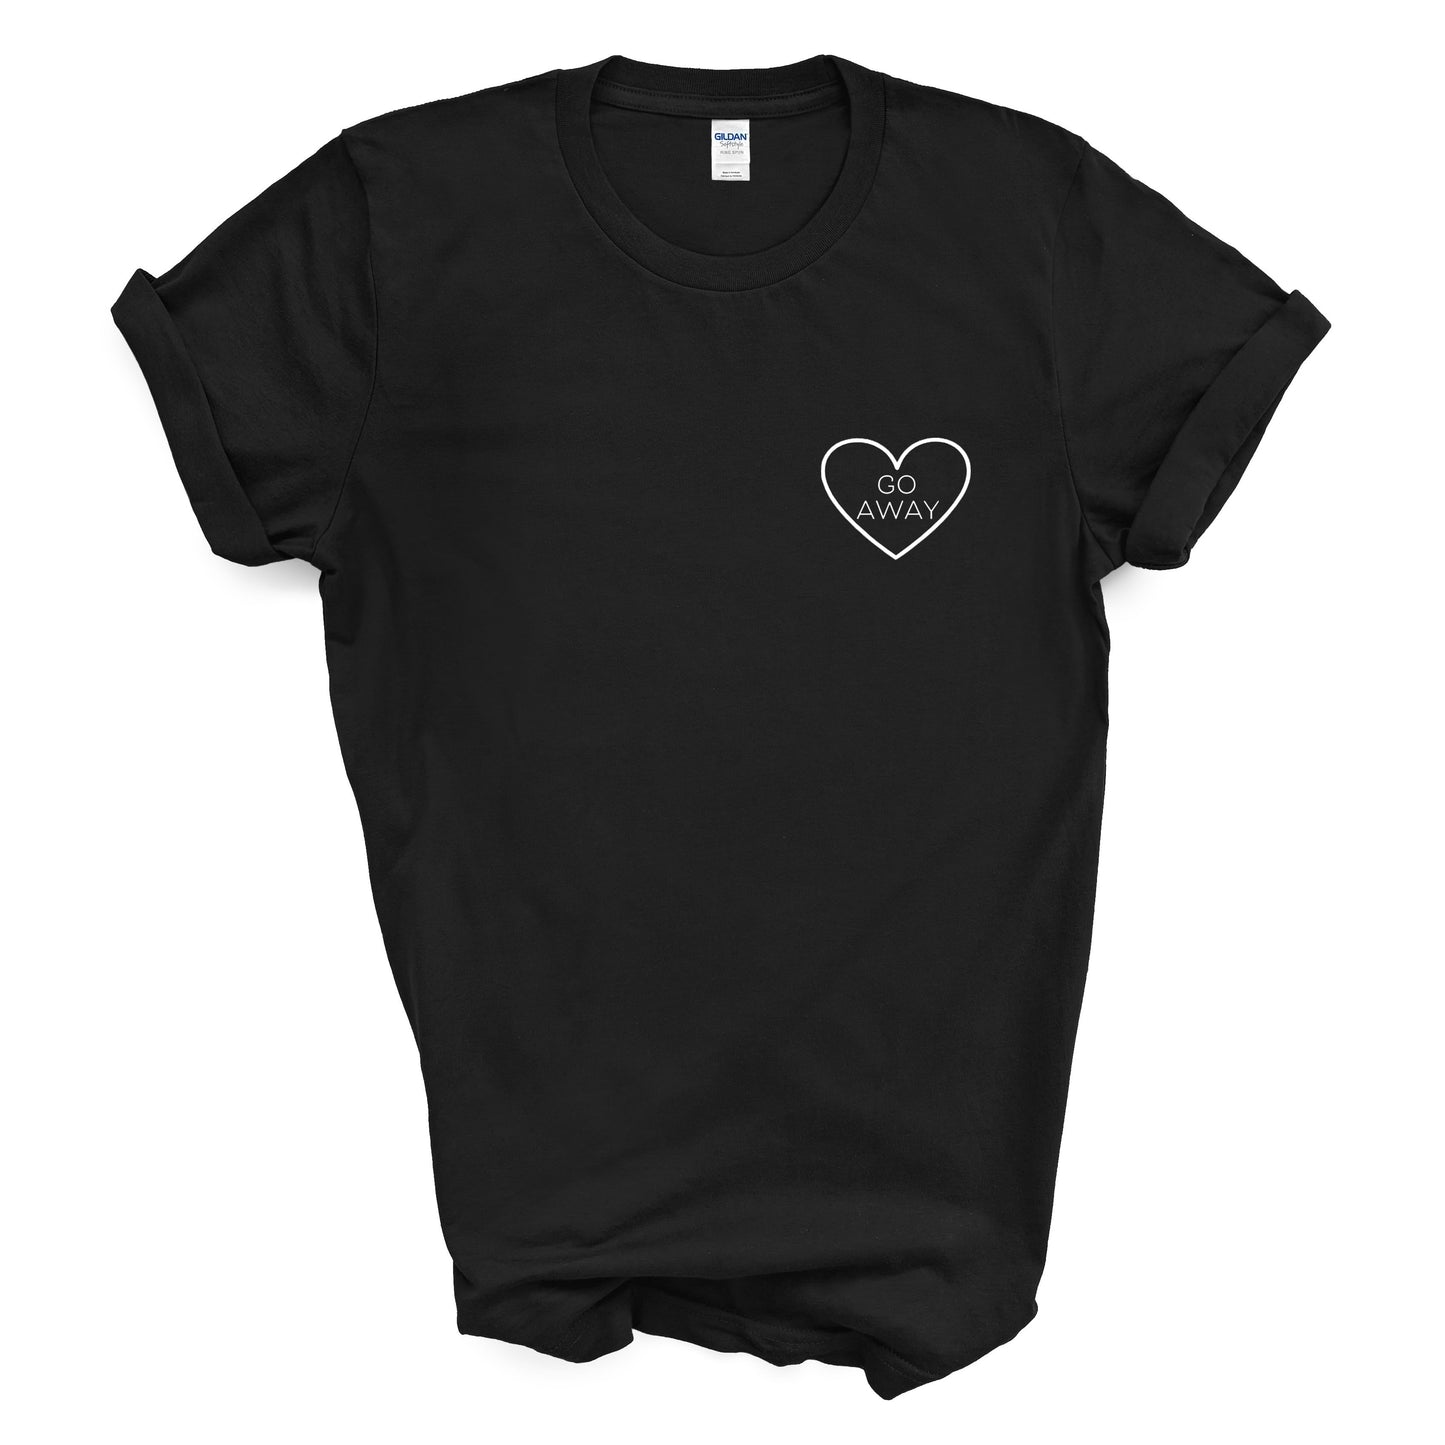 Unisex T-shirt - Black - Graphic Tee